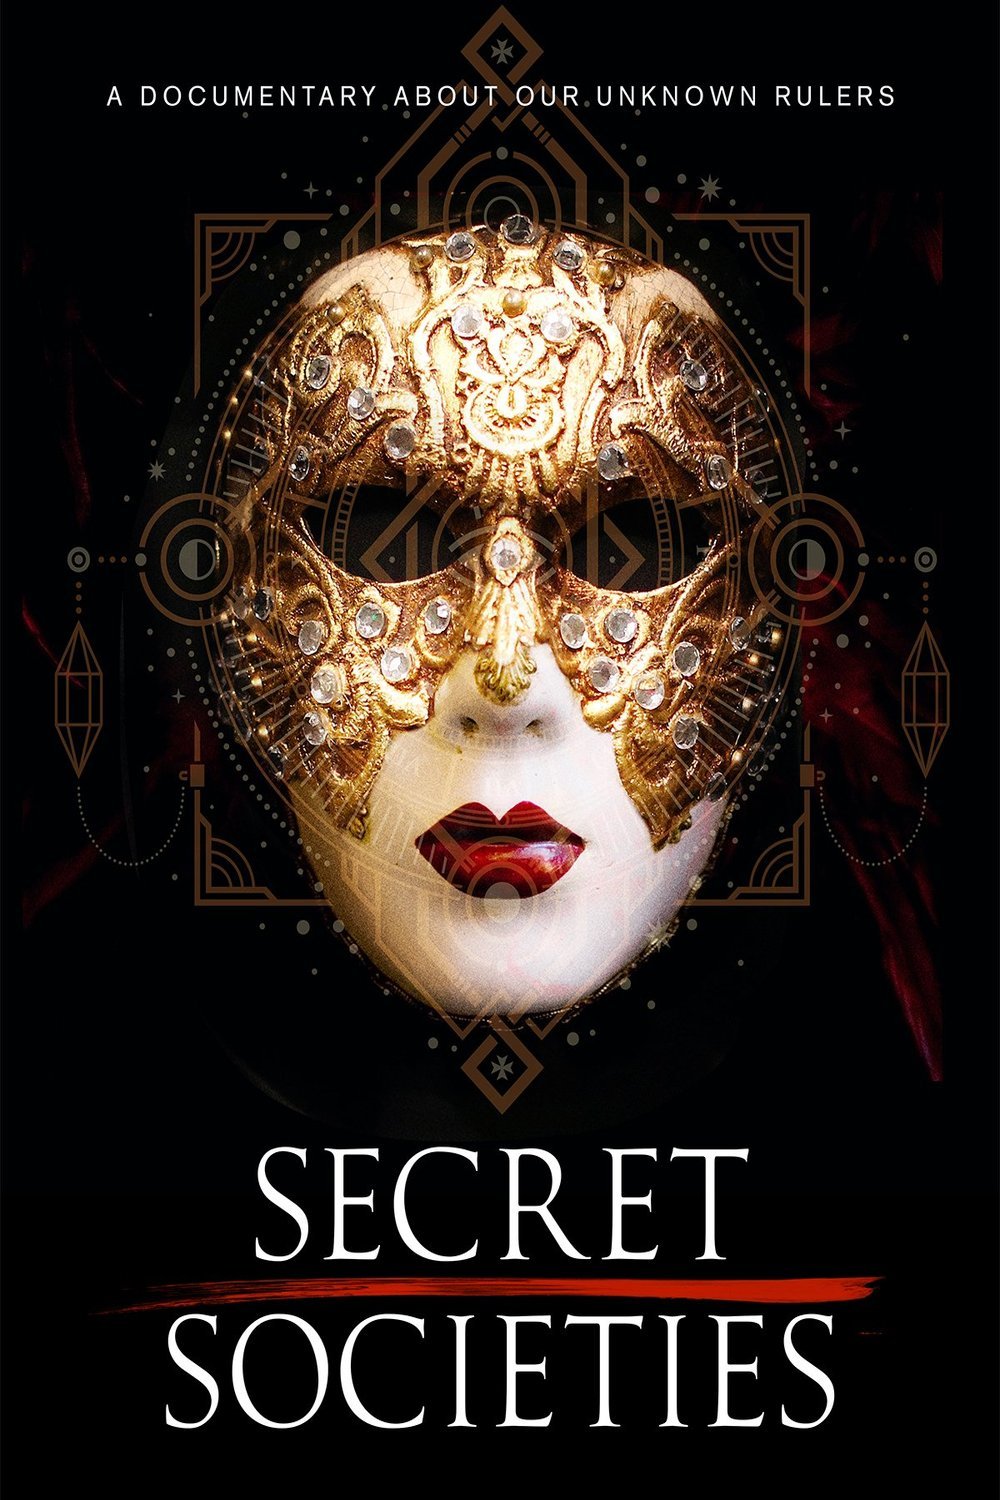 Poster of the movie Secret Societies